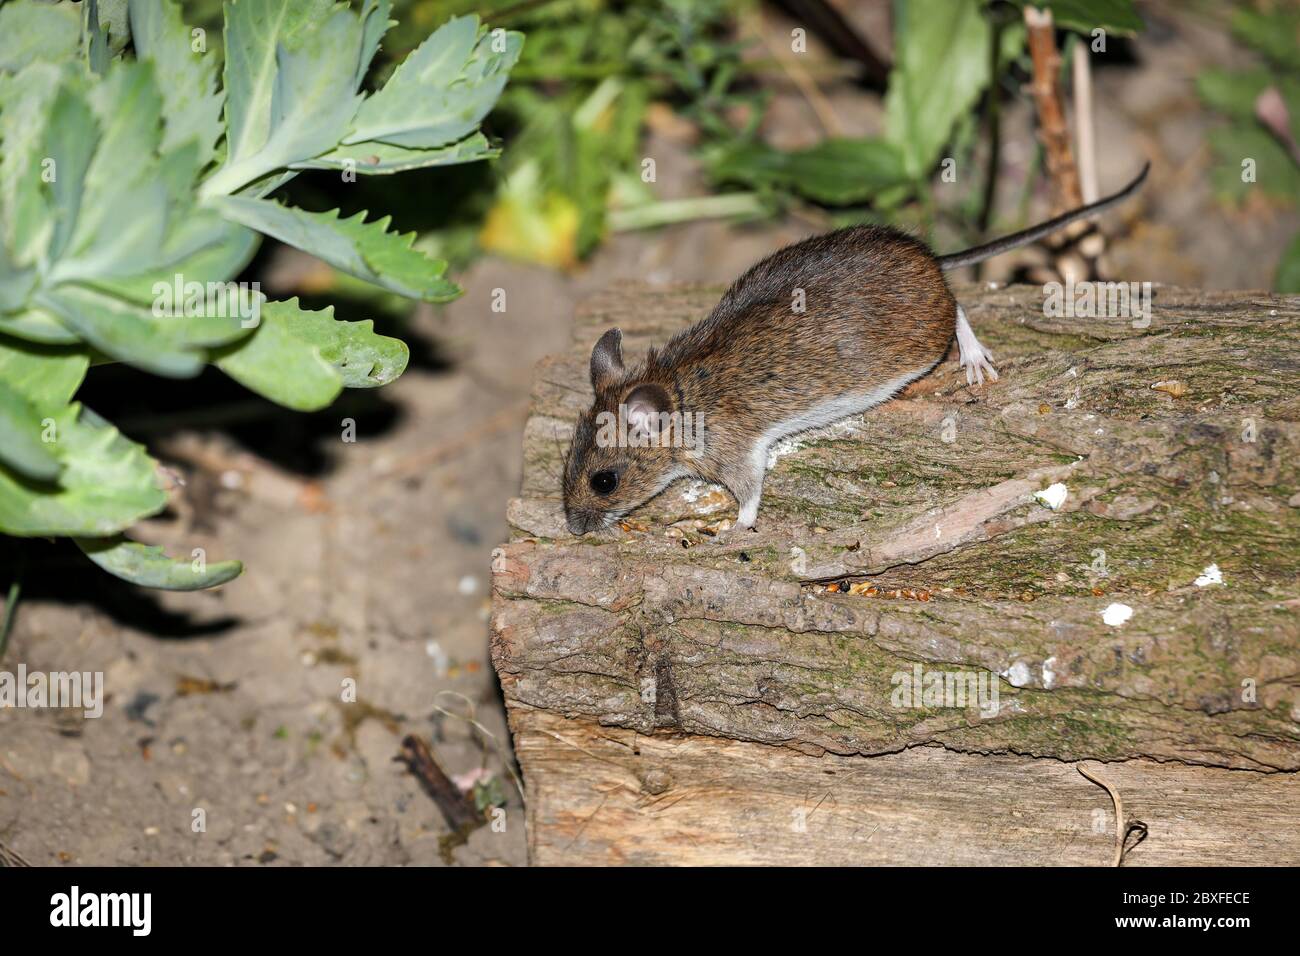 Wood Mouse (Apodemus sylvaticus) in Garden Environment, UK Stock Photo